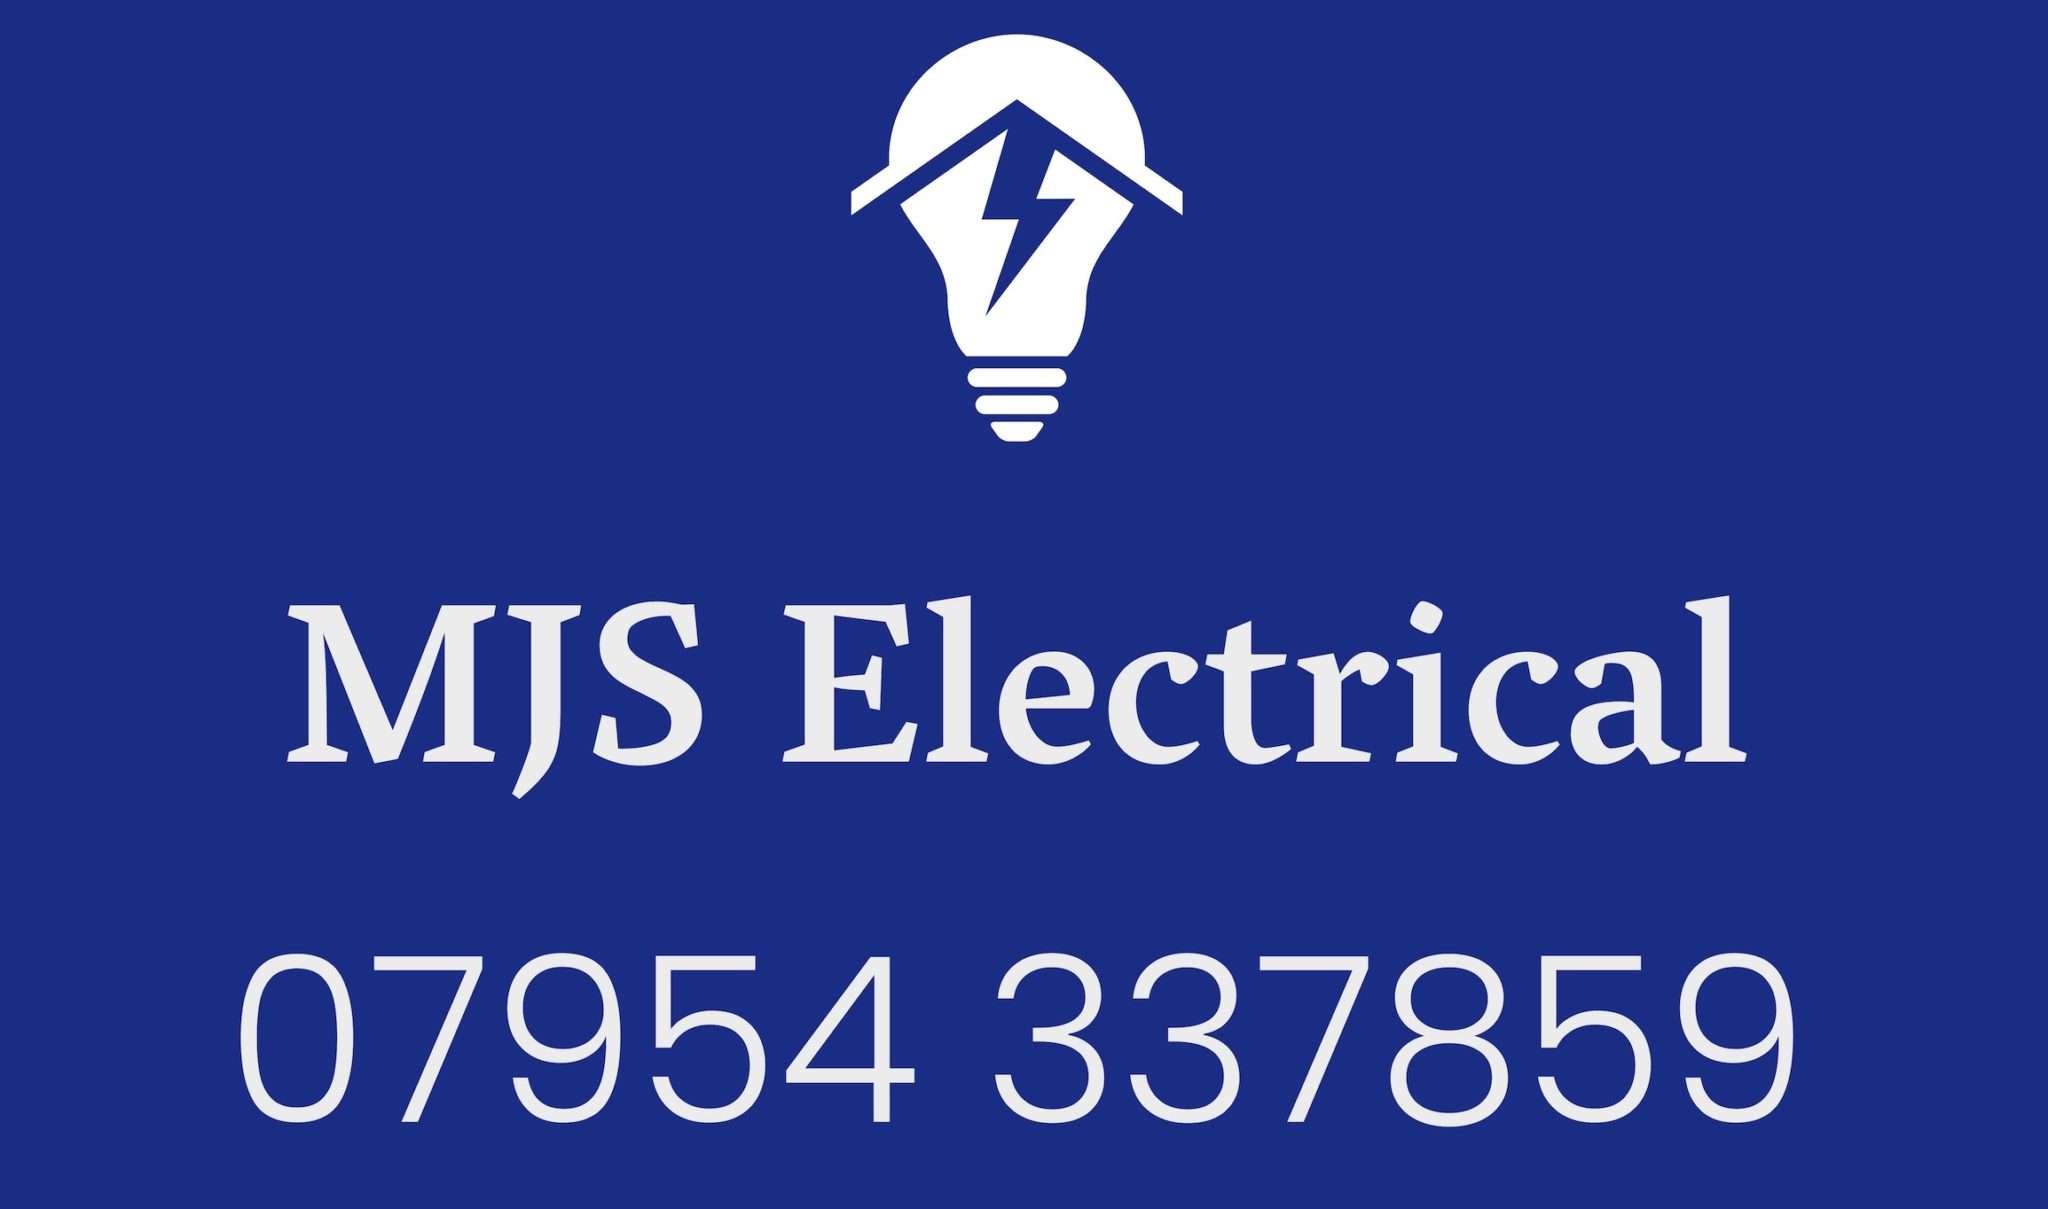 Milton Keynes Electrician MJS Electrical Milton Keynes Electrician